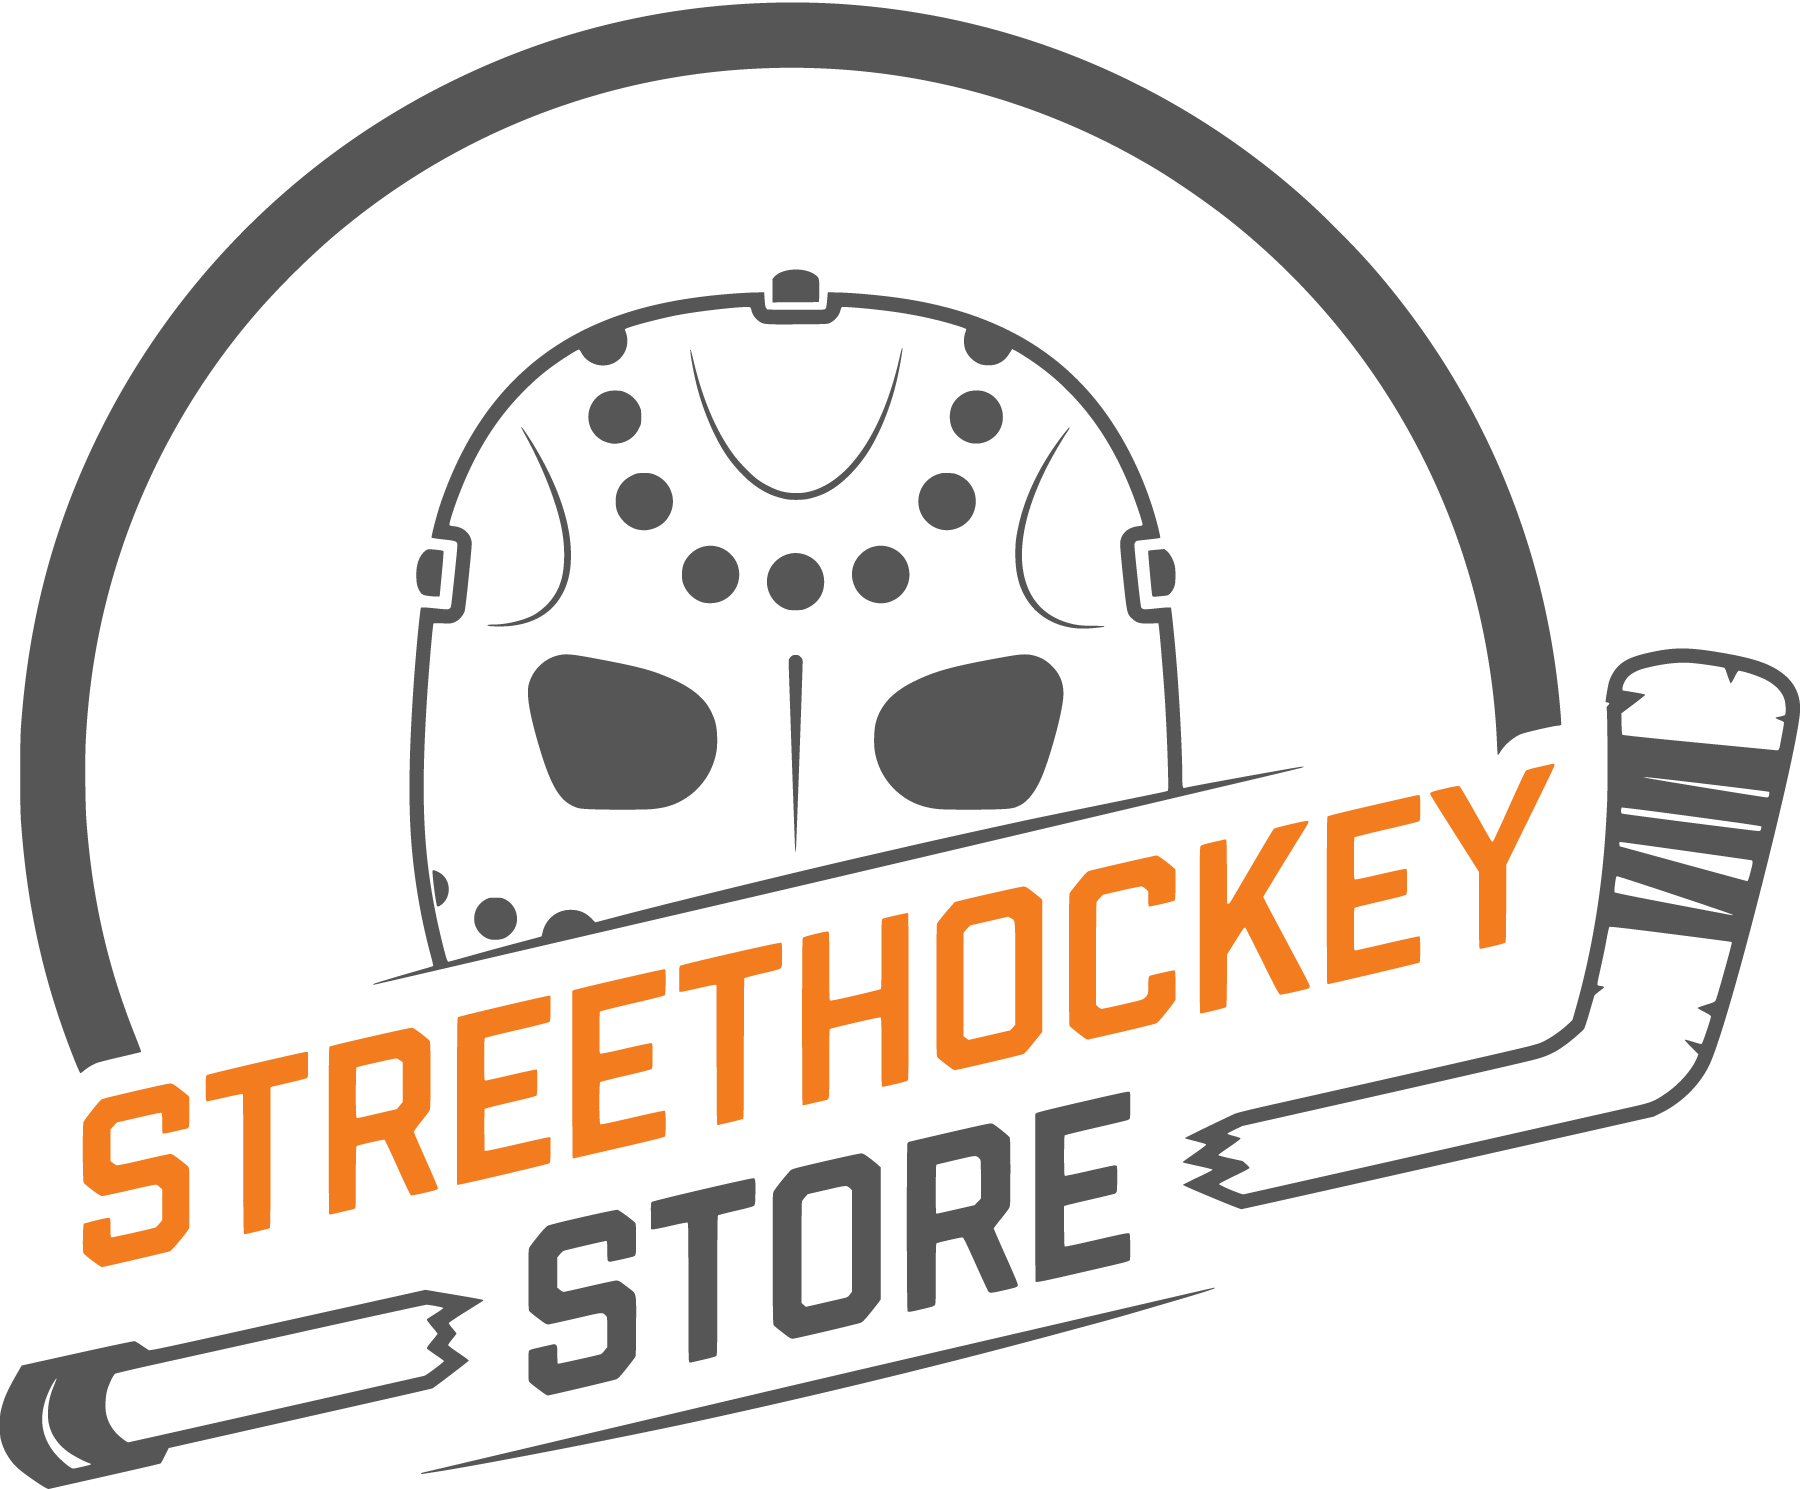 streethockeystore_logo